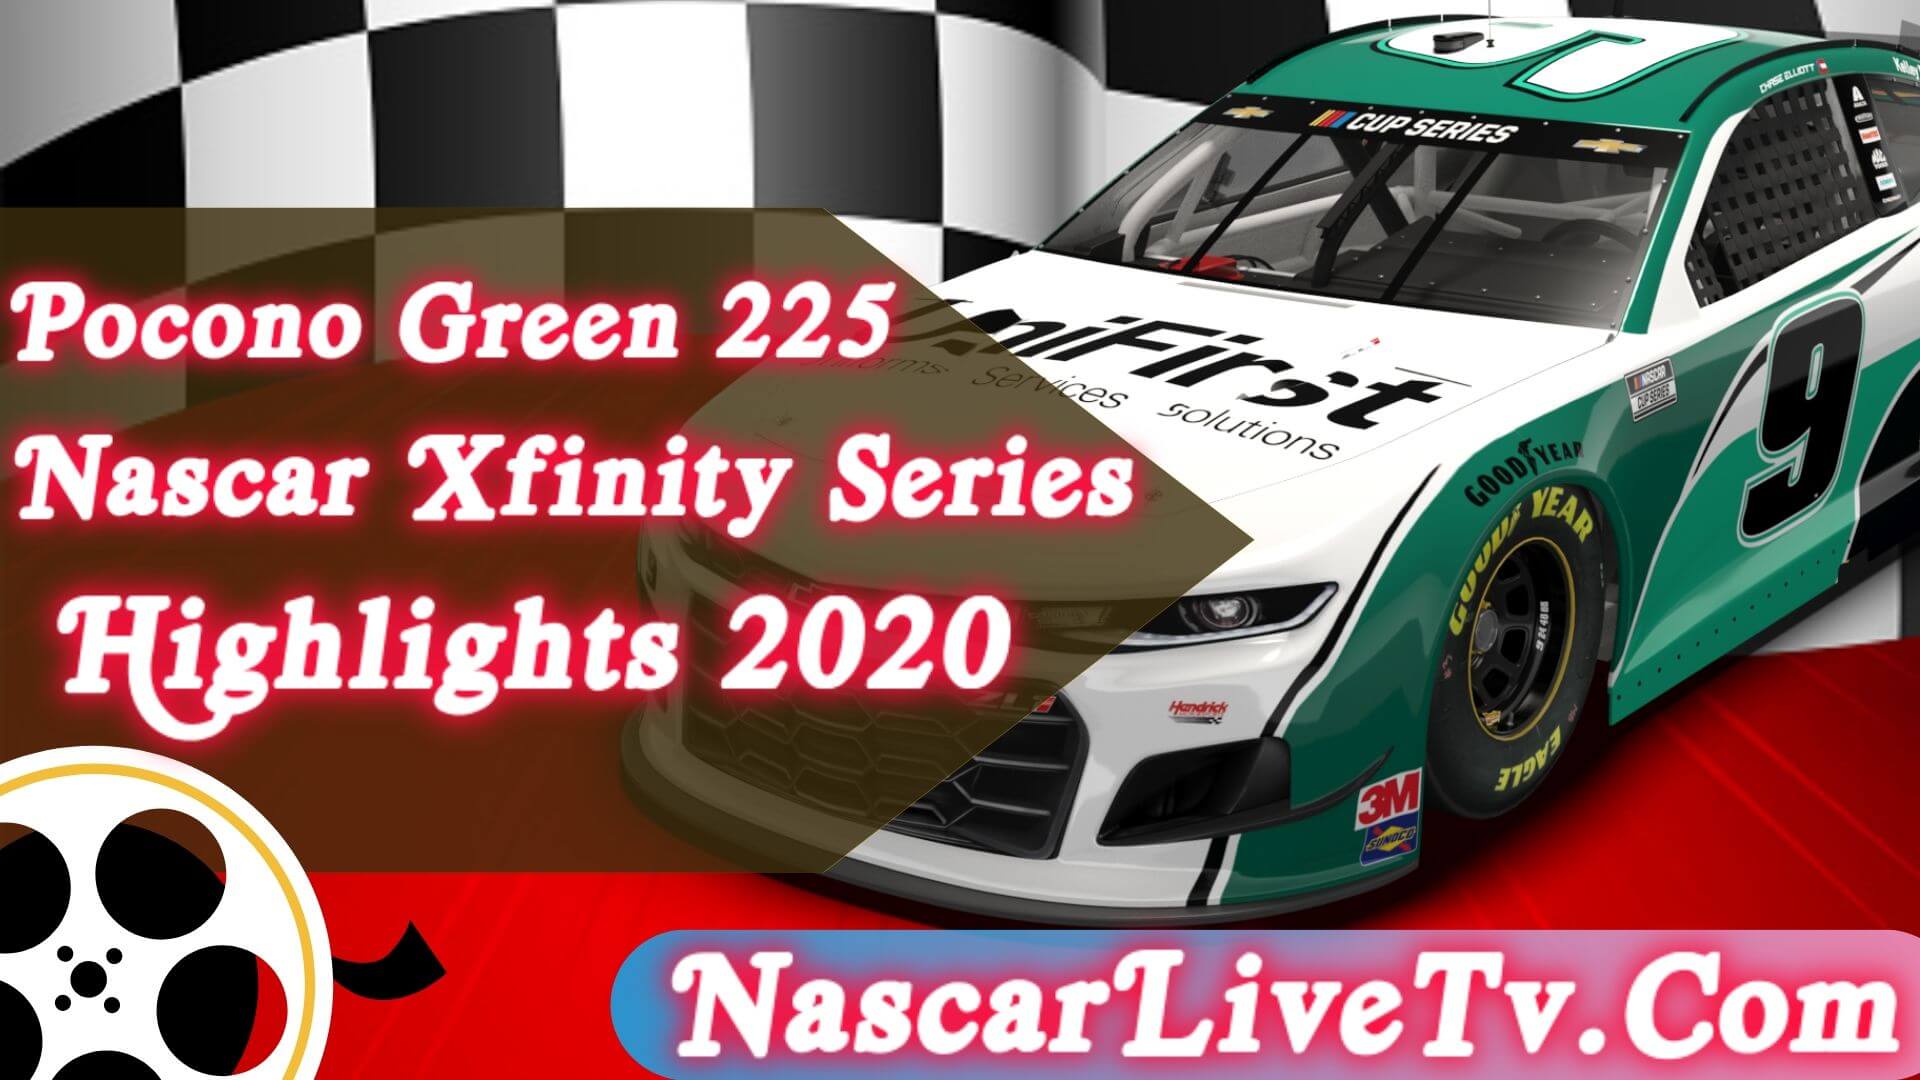 Pocono Green 225 Nascar Xfinity Series 2020 Highlights